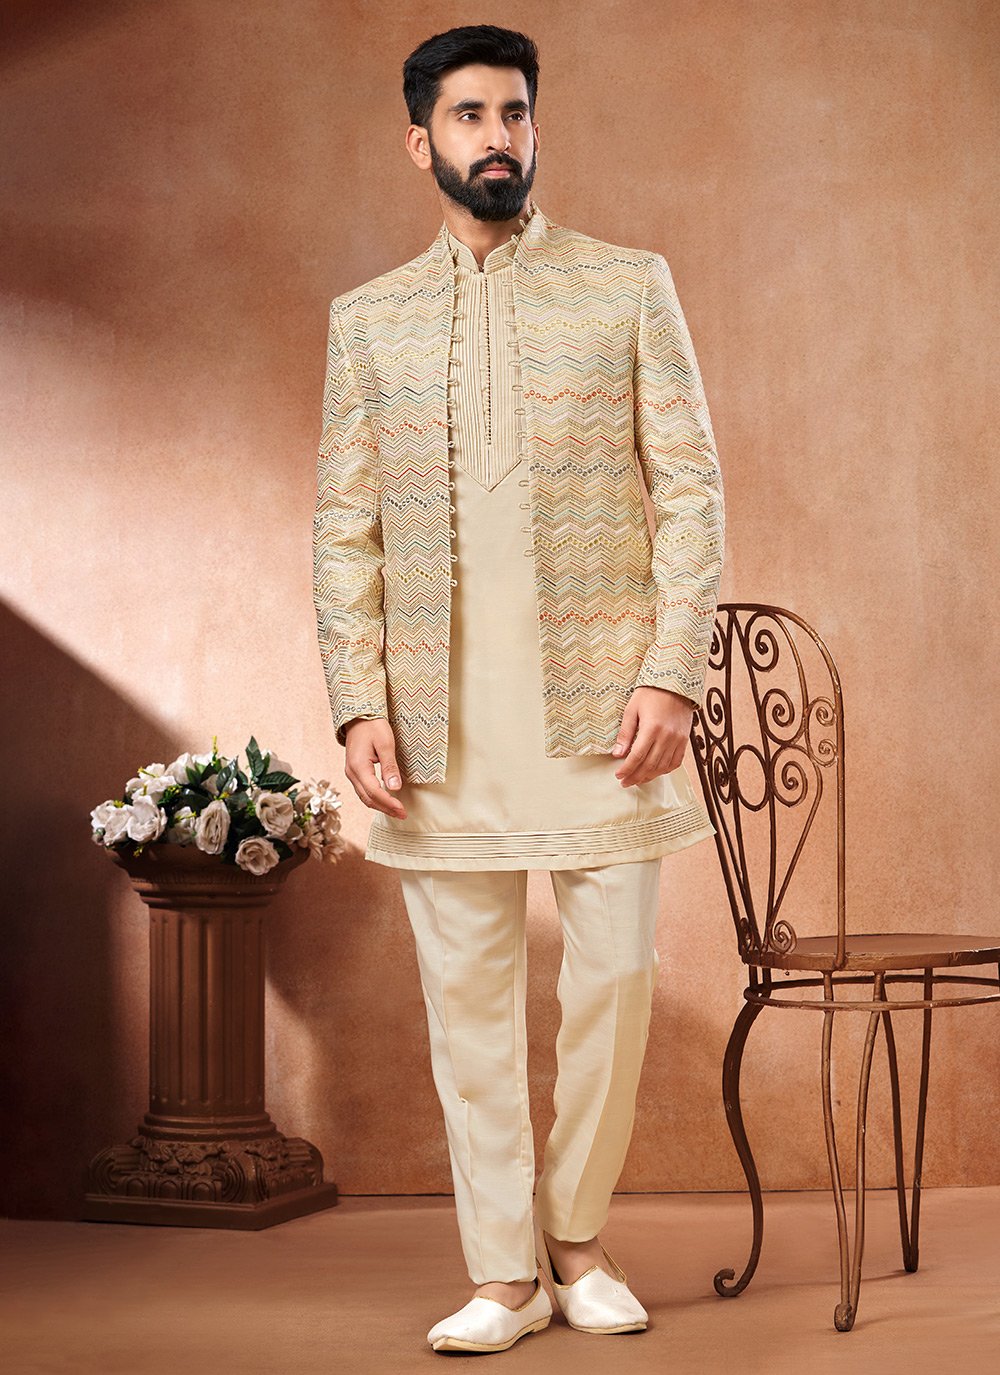 INMONARCH Mens Cream Jodhpuri Suit 3 Pc Embroidered JO1730R34 34 Regular  Cream at Amazon Men's Clothing store